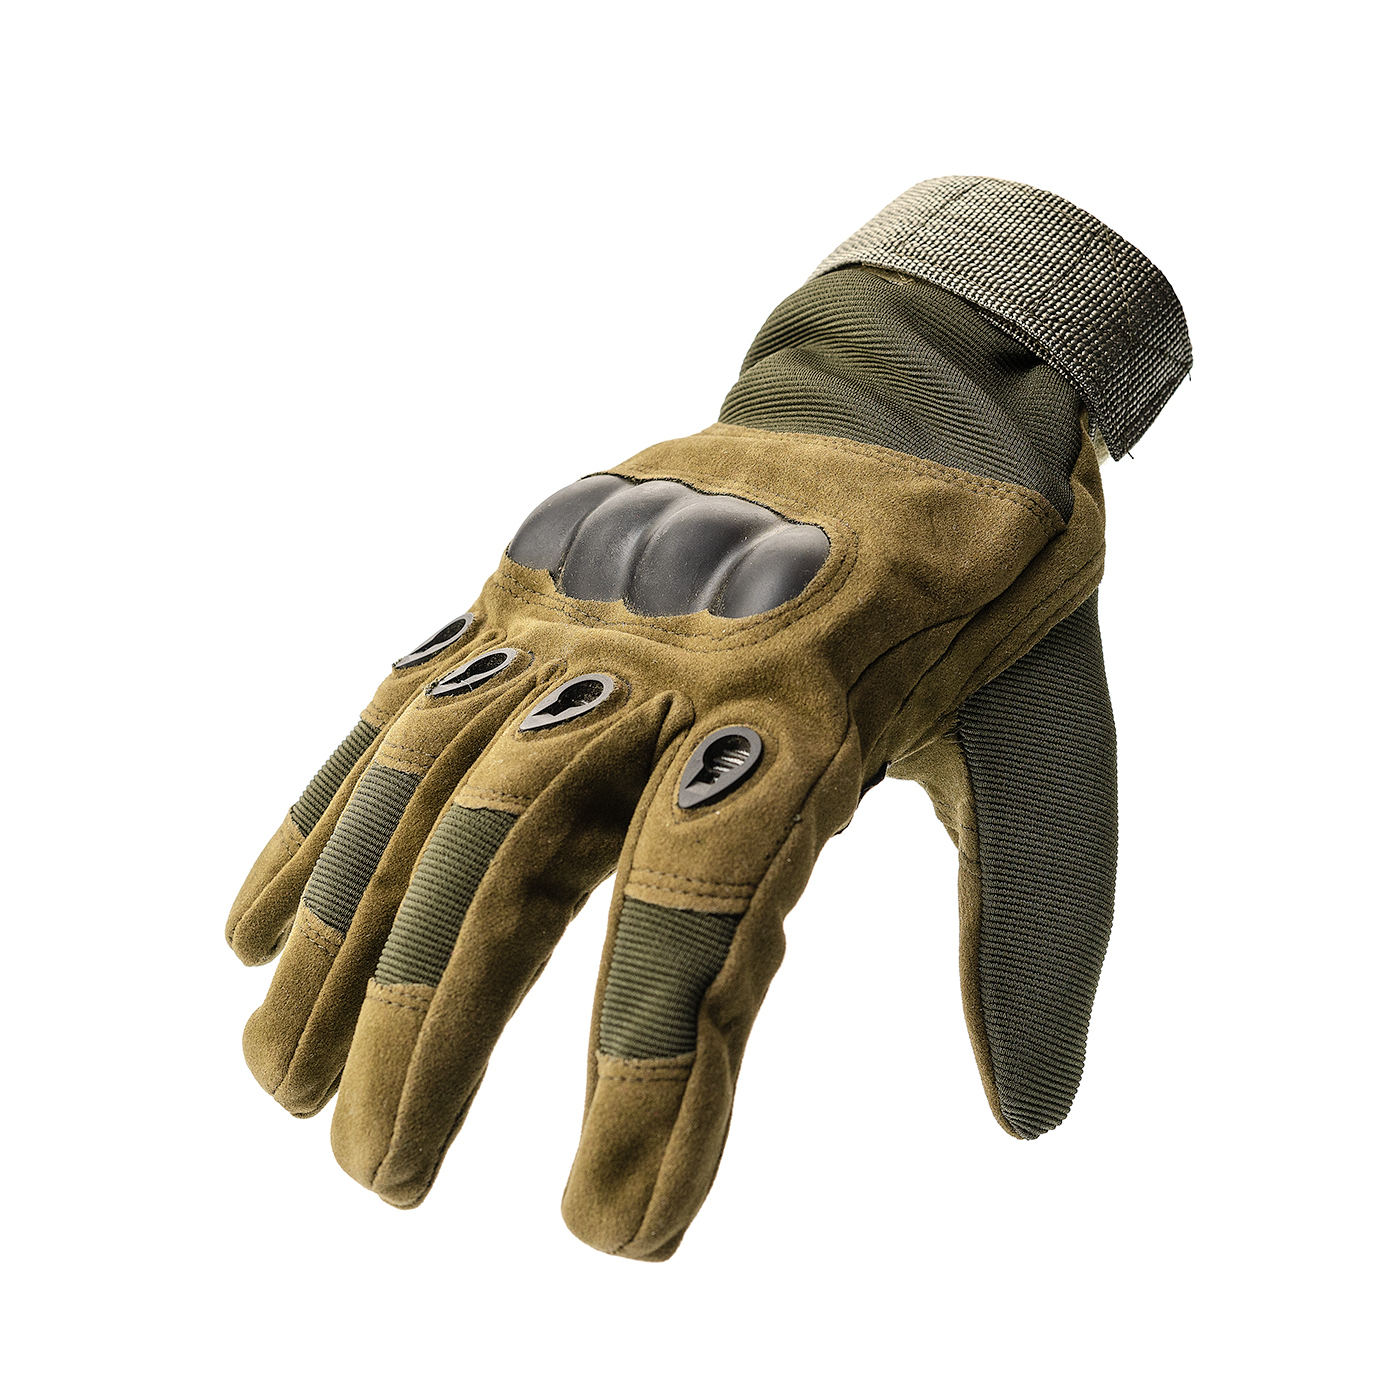 Тактические перчатки Армейские, размер XL от China Factory